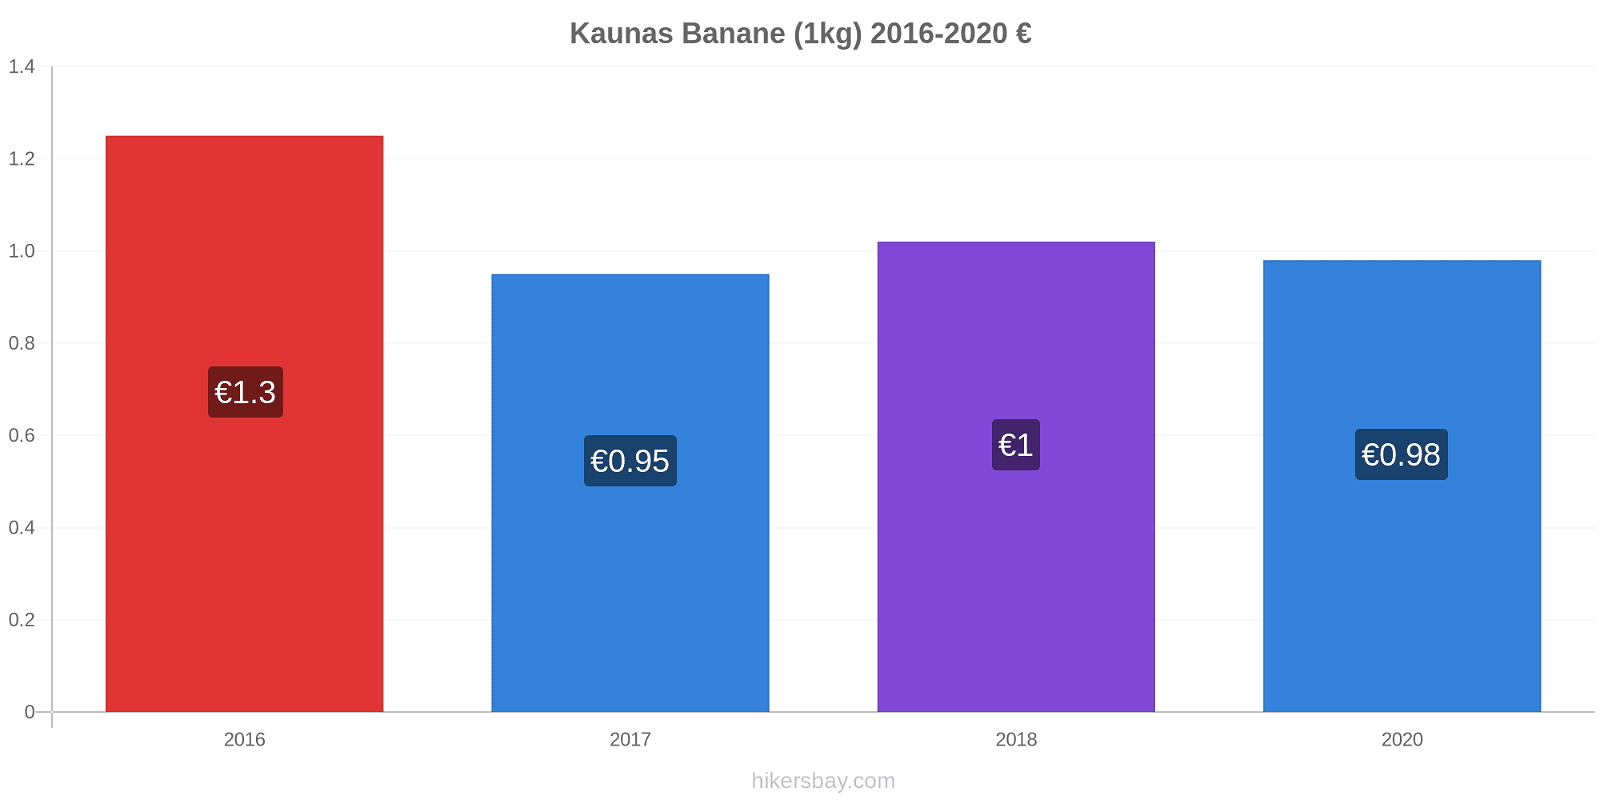 Kaunas variazioni di prezzo Banana (1kg) hikersbay.com